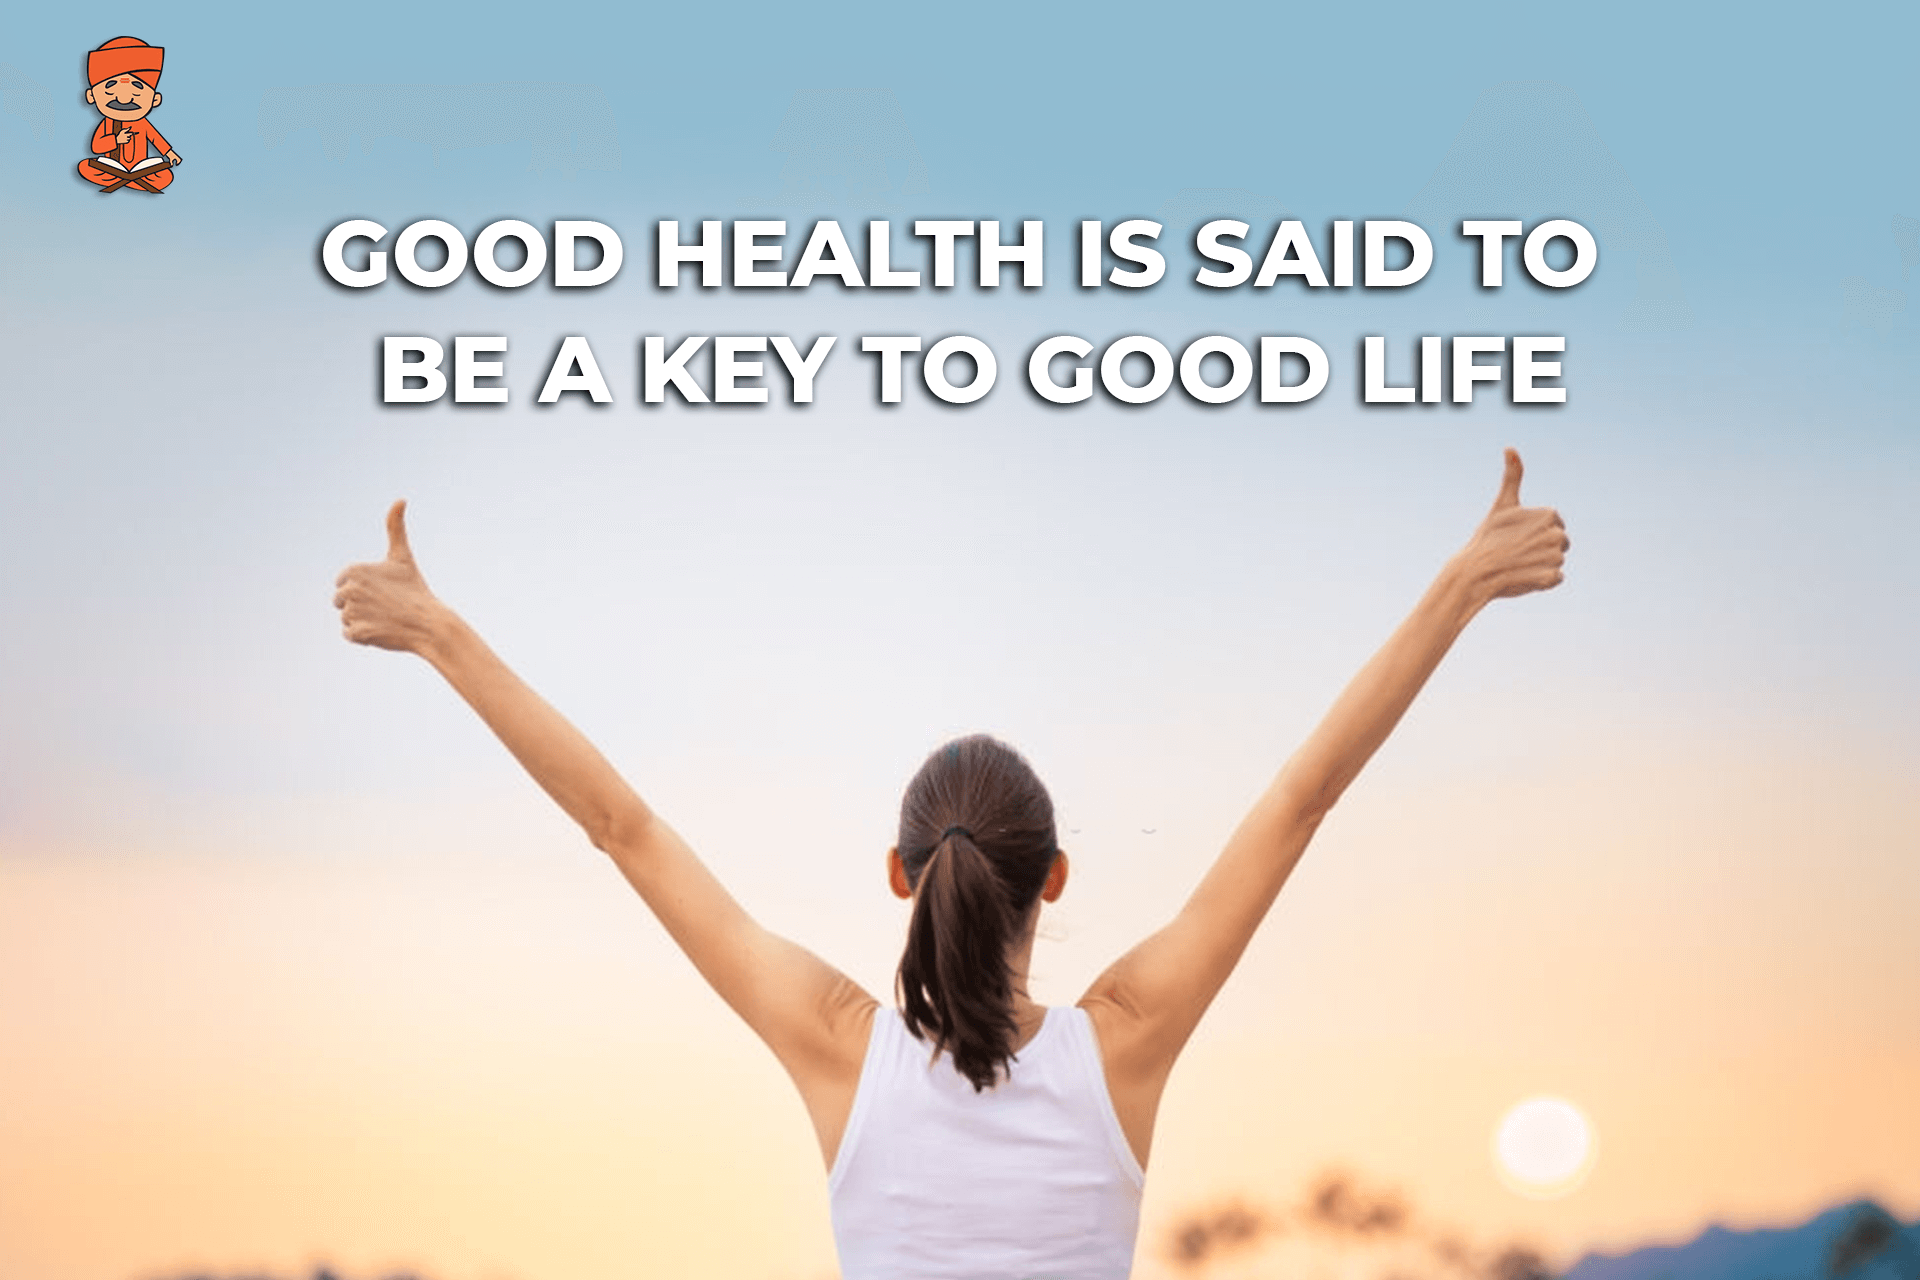 a speech on good health